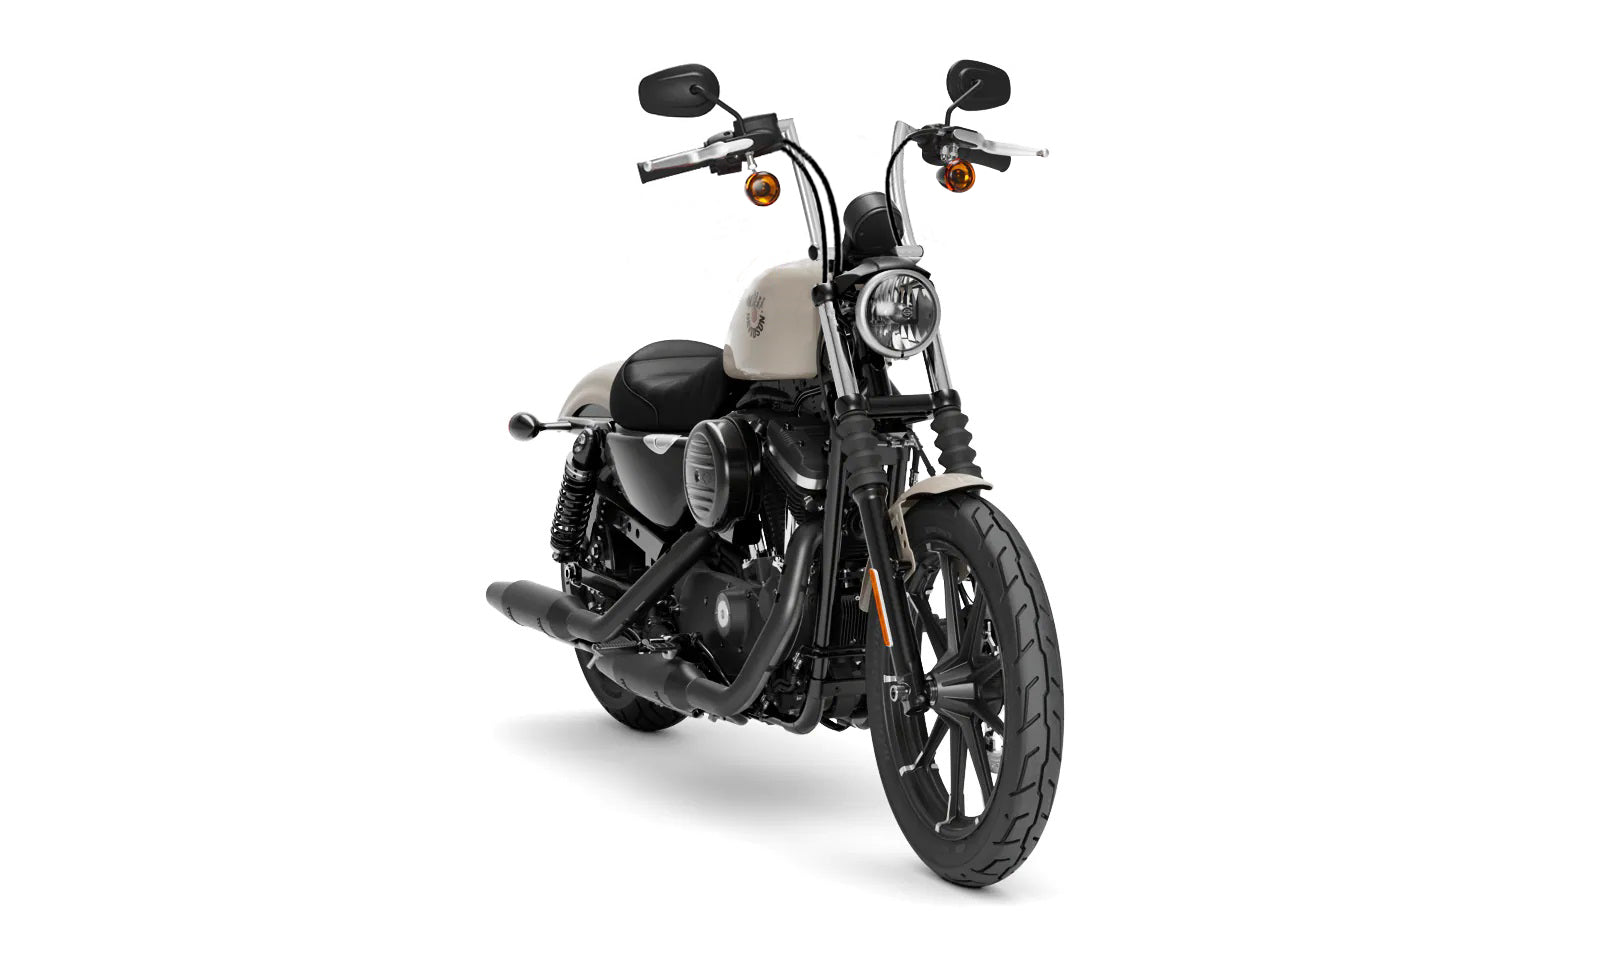 Viking Iron Born 9" Handlebar for Harley Sportster 883 Iron XL883N Chrome Bag on Bike View @expand